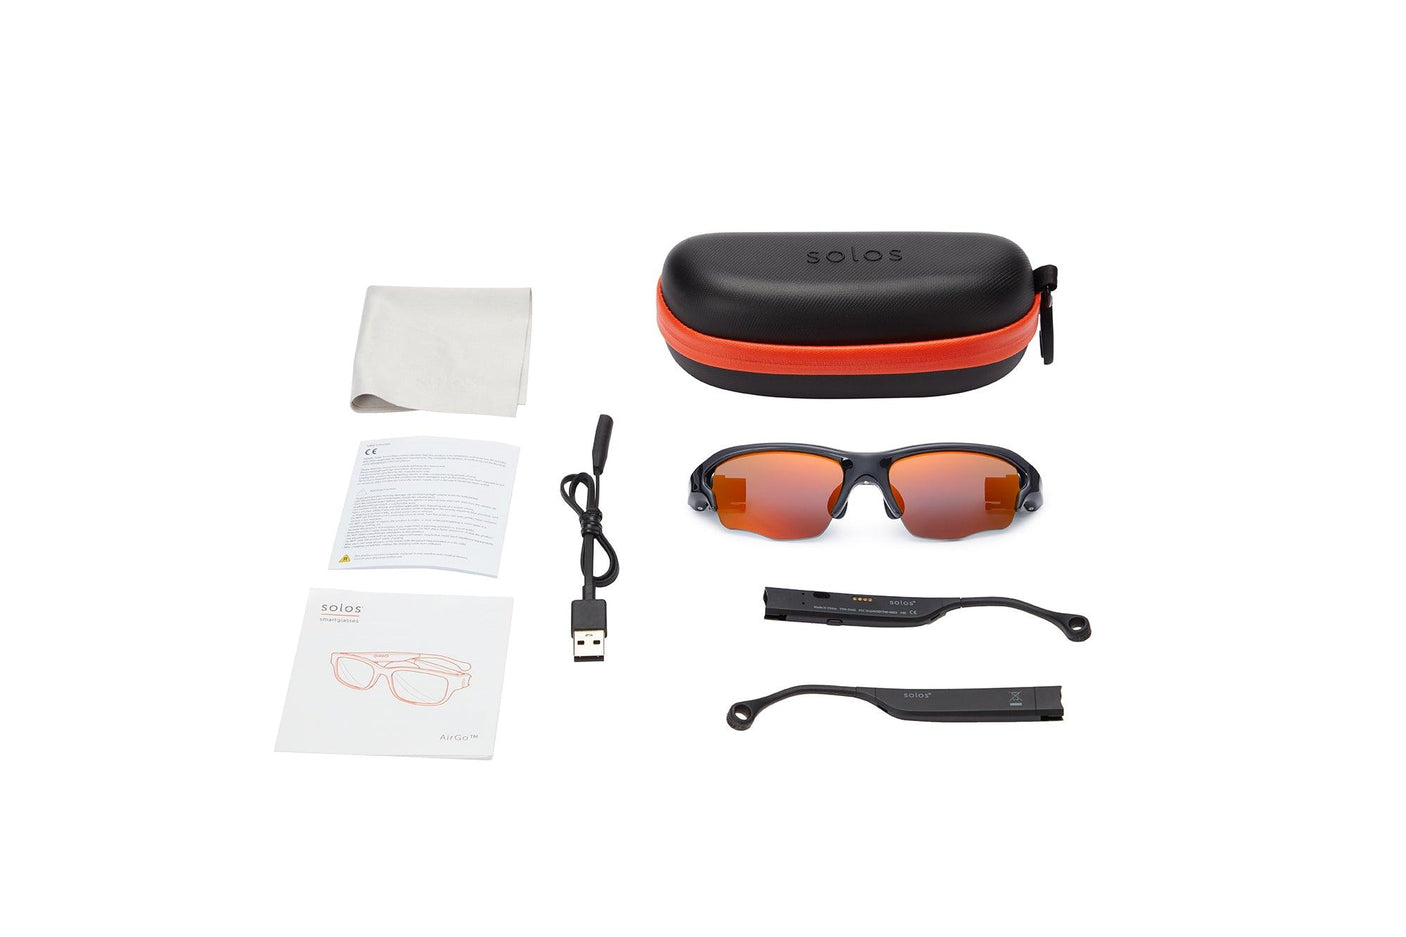 Neon 2 Smartglasses | AirGo™2 - Solos Technology Limited